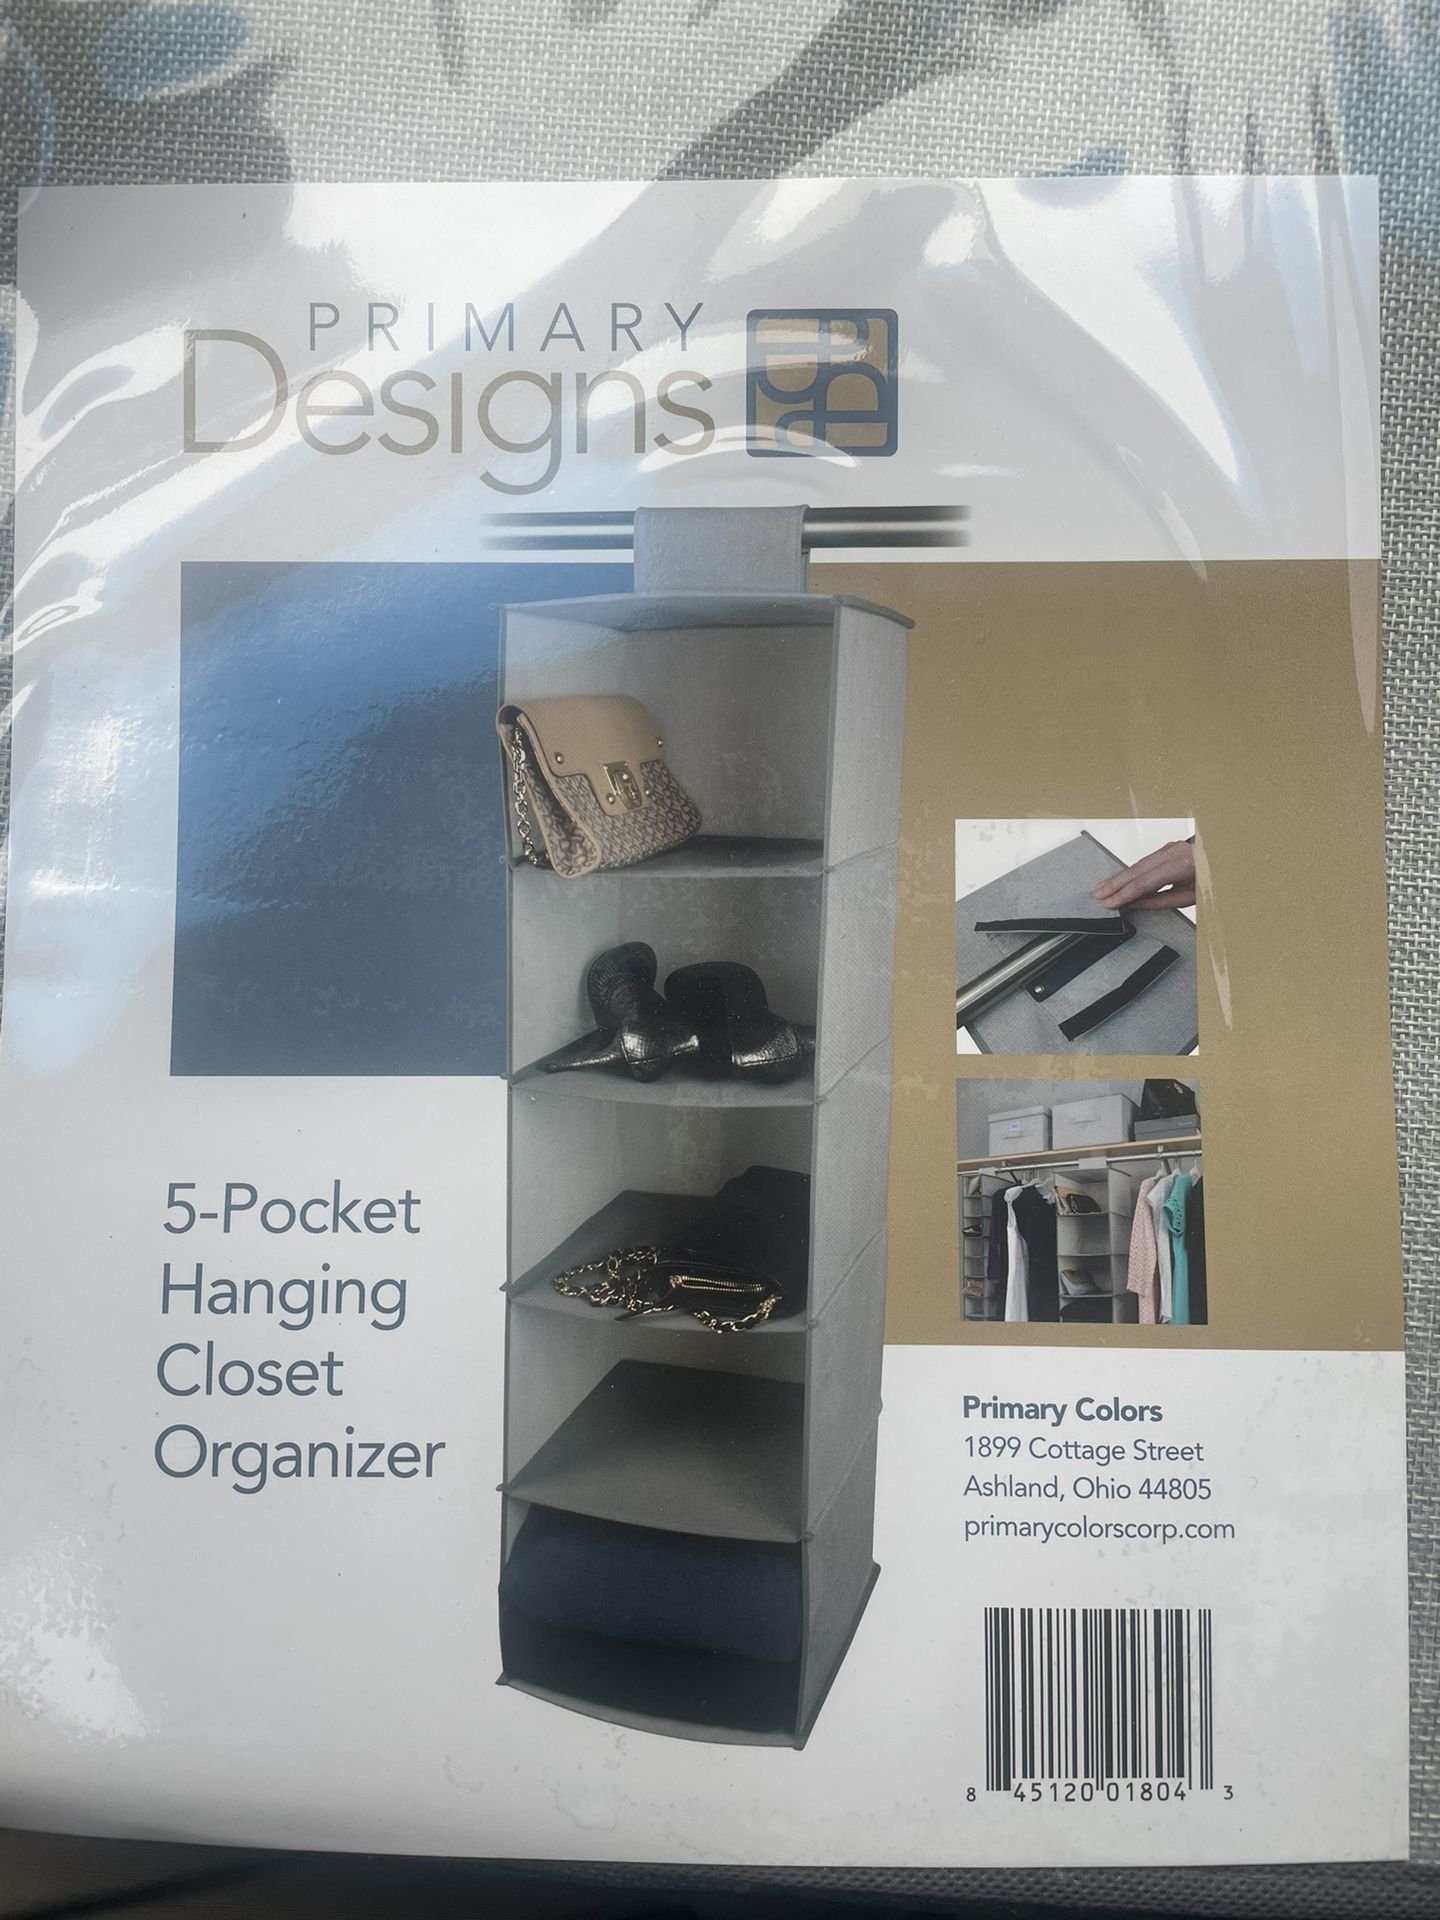 Primary Designs 5-Pocket Hanging Closet Organizer